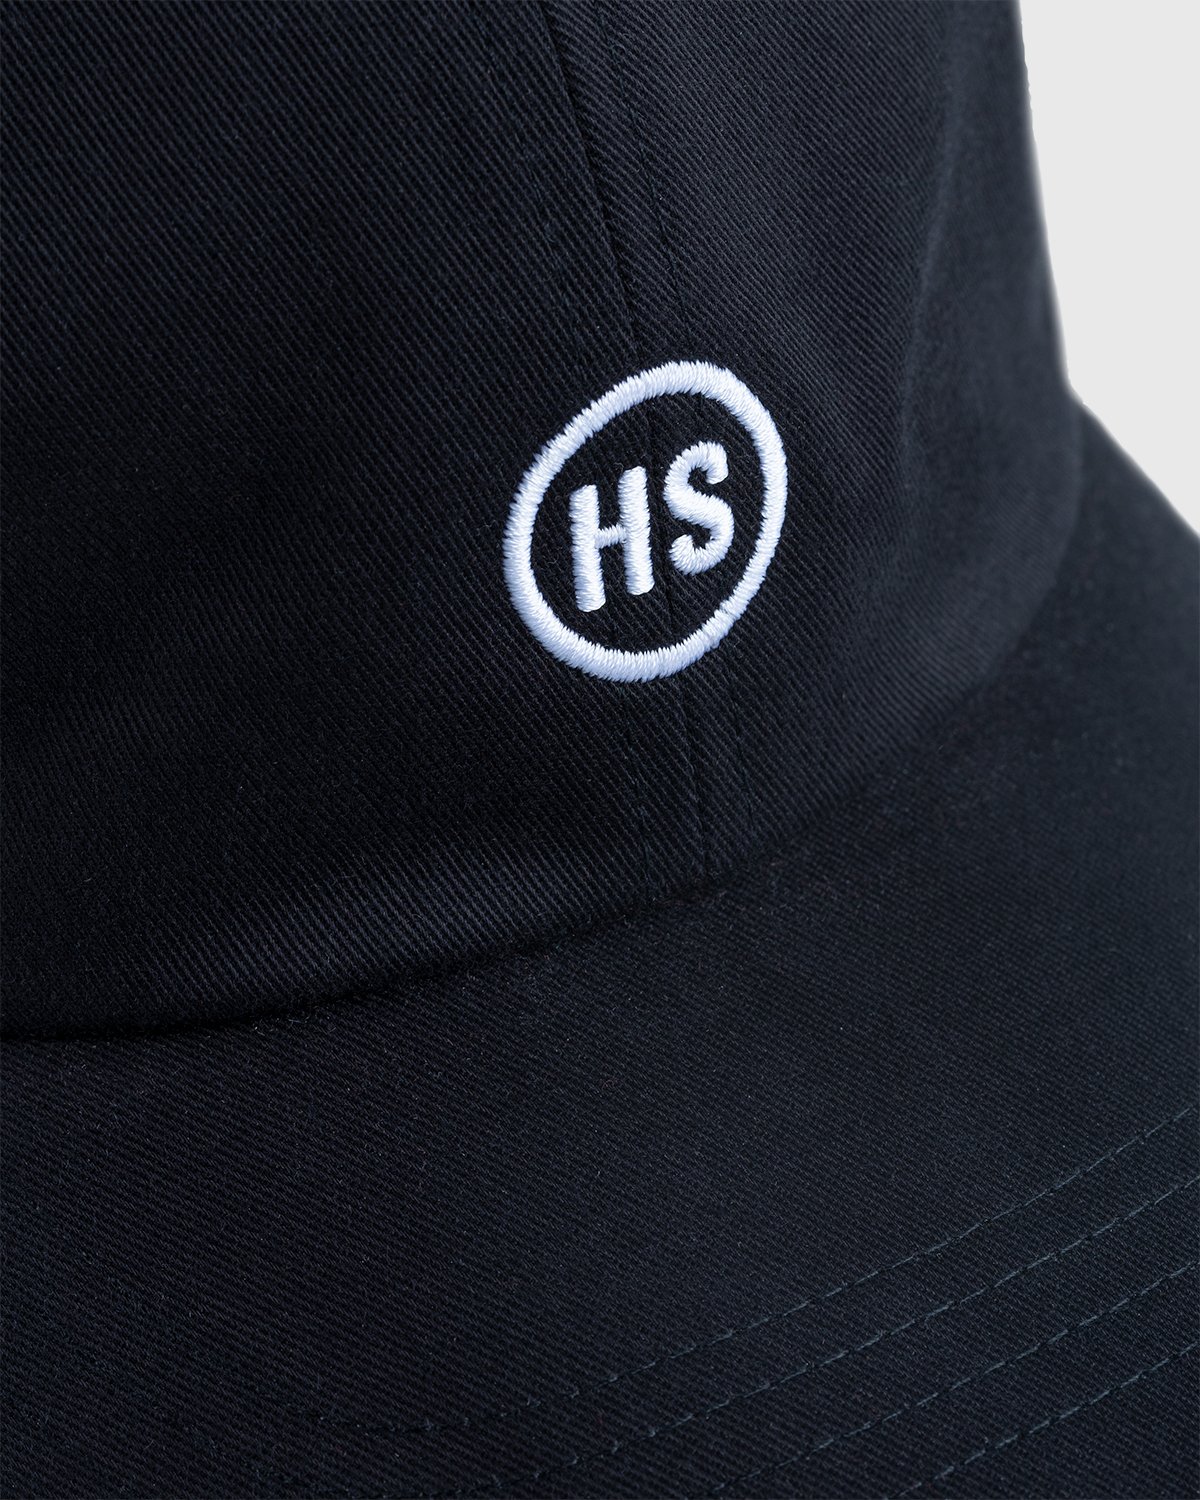 Highsnobiety - Baseball Cap Black - Accessories - Black - Image 5